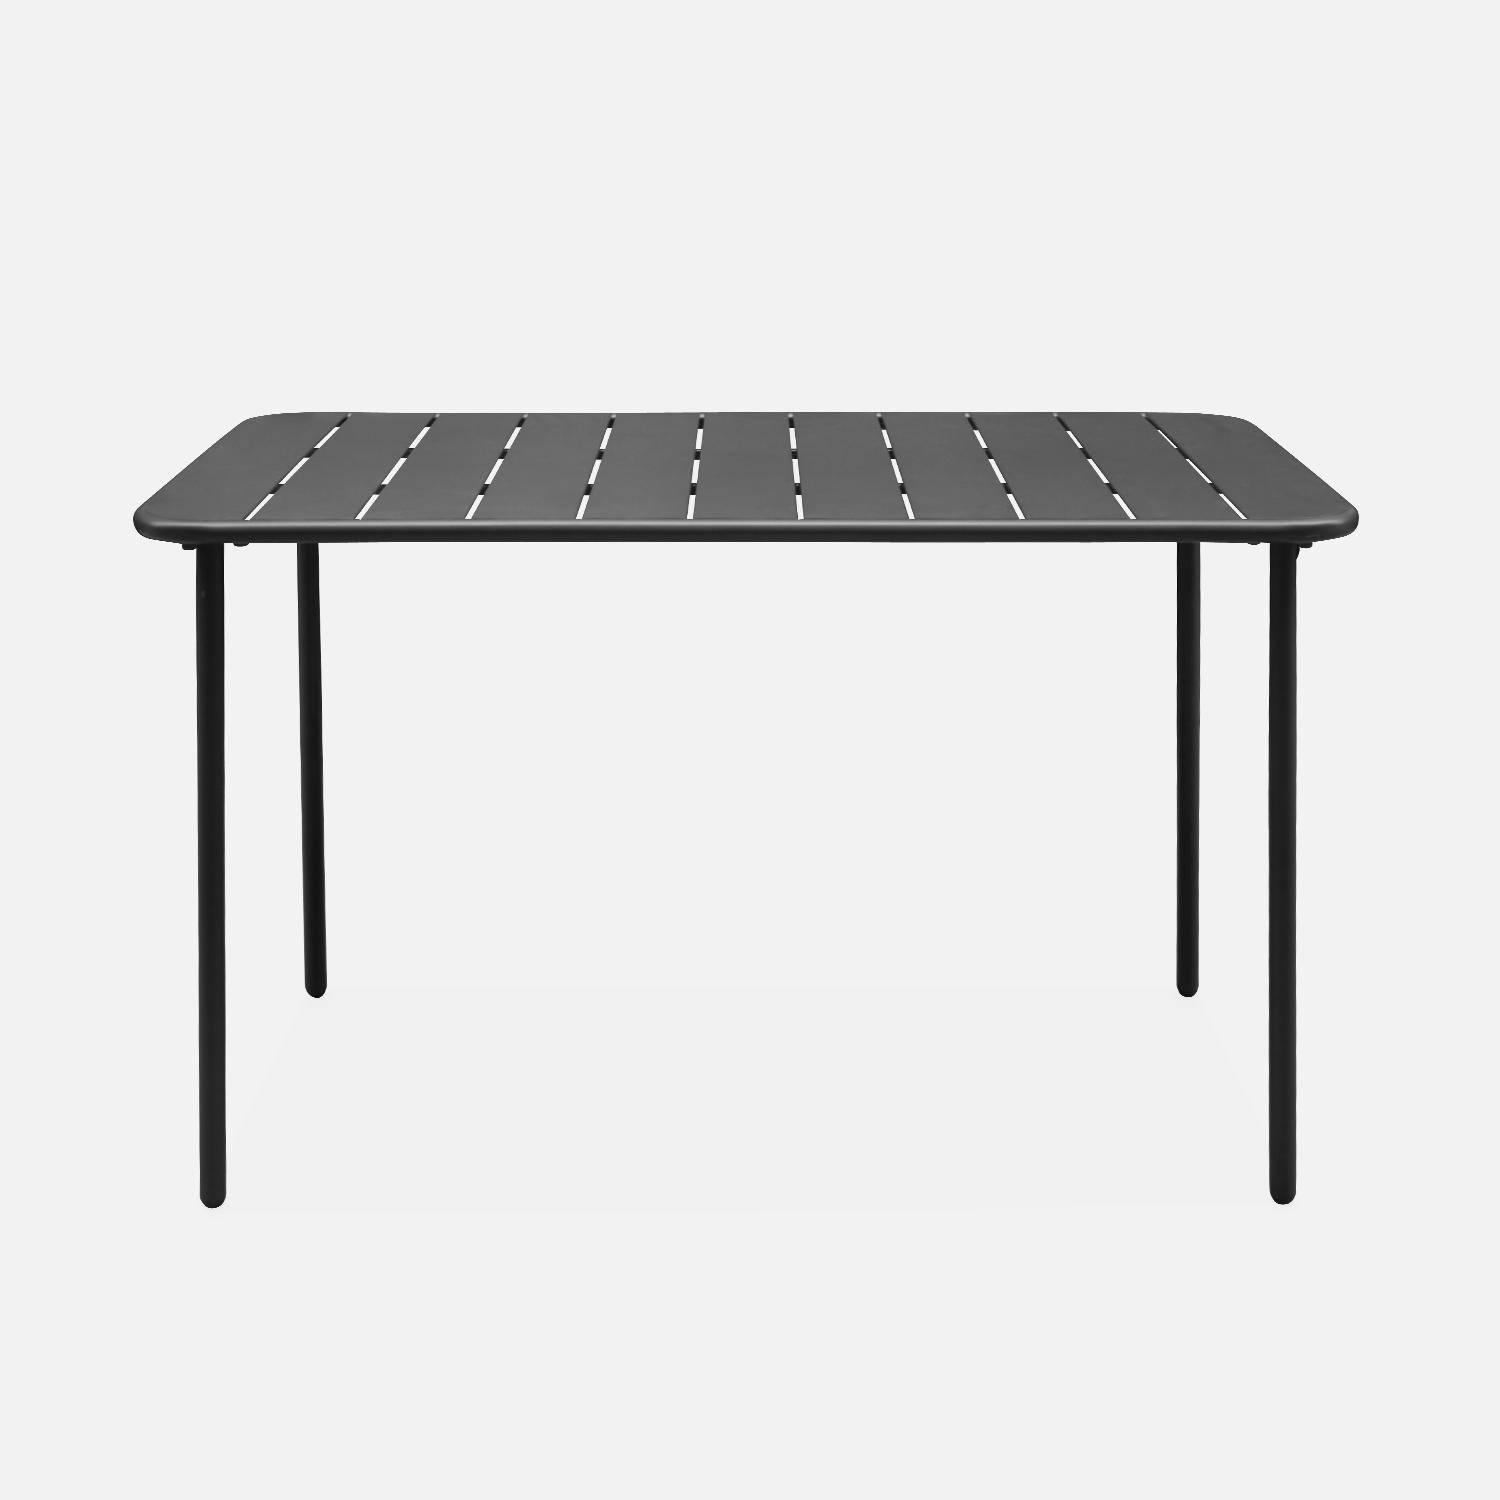 4-seater rectangular steel garden table, 120x70cm - Amelia - Anthracite,sweeek,Photo5